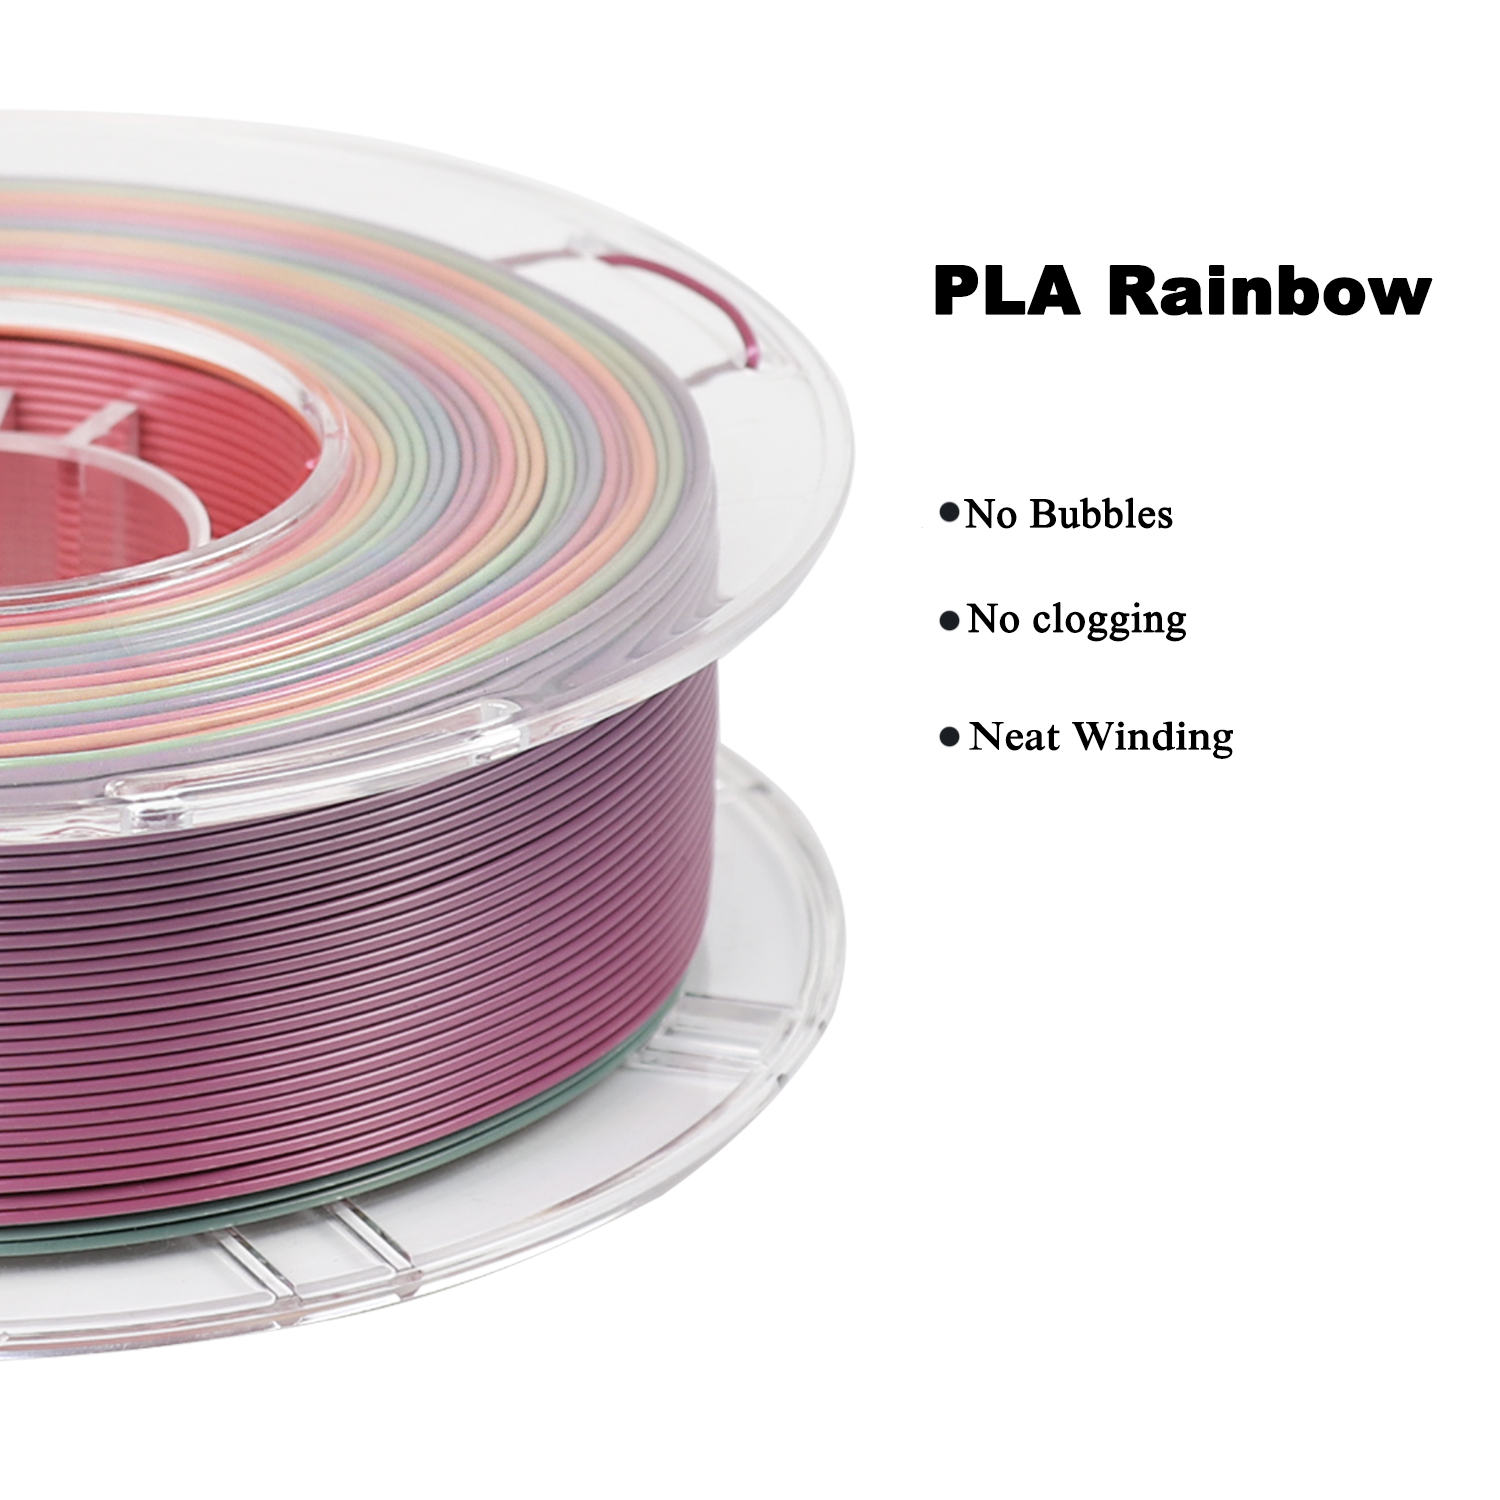 PLA Silk Ranibow evolt impressão 3D